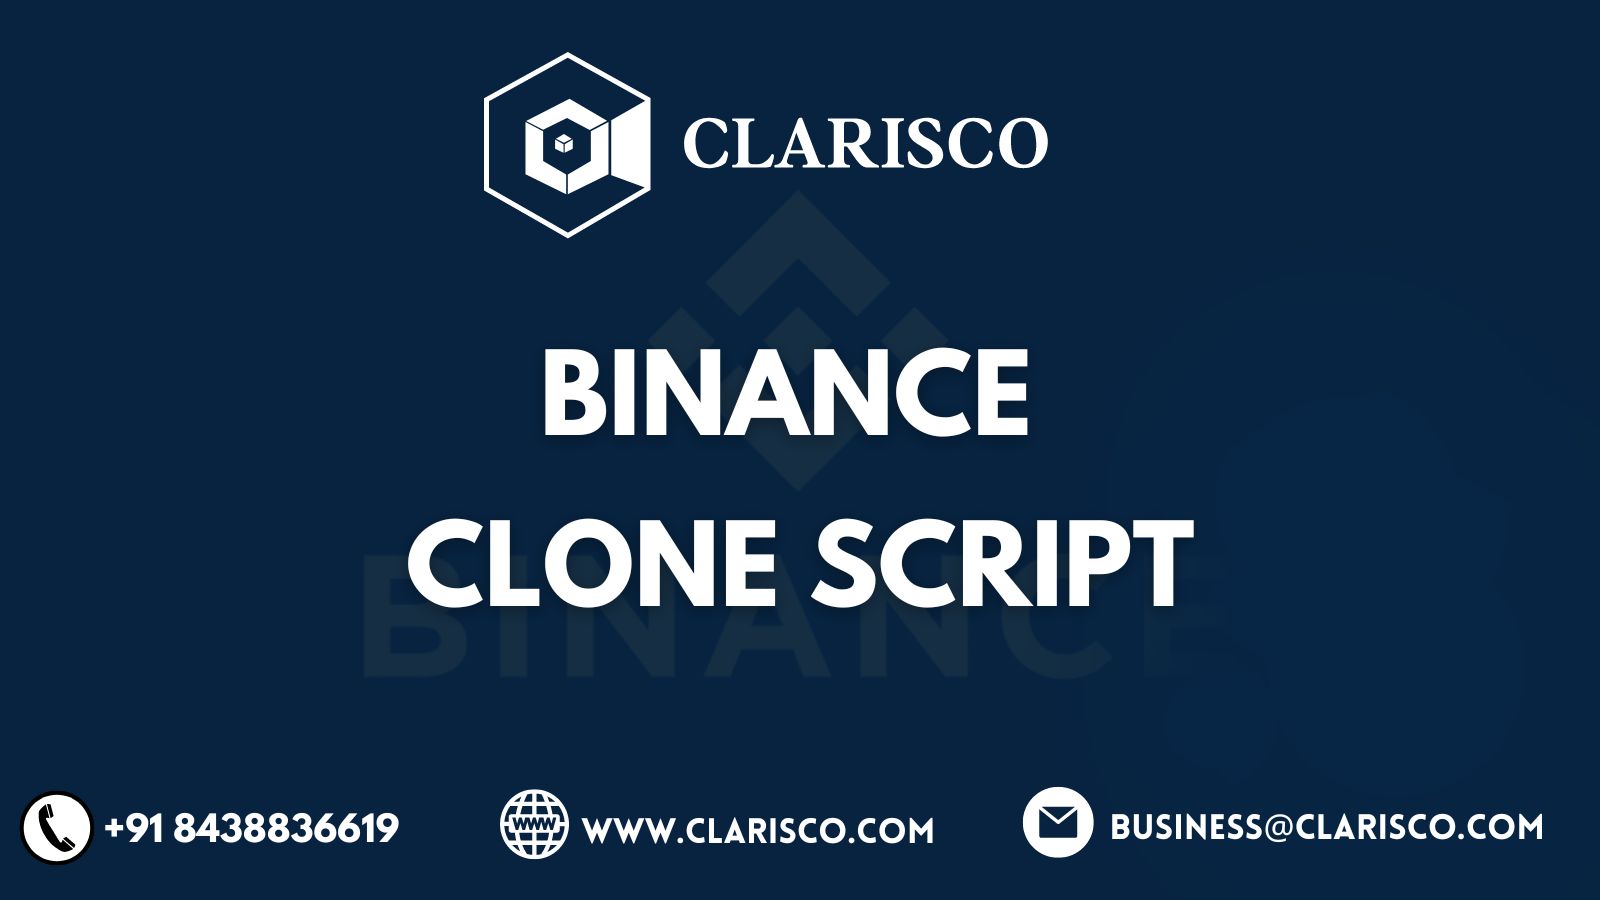 Binance Clone Script : Demo, Pricing & Features | Binance DEX